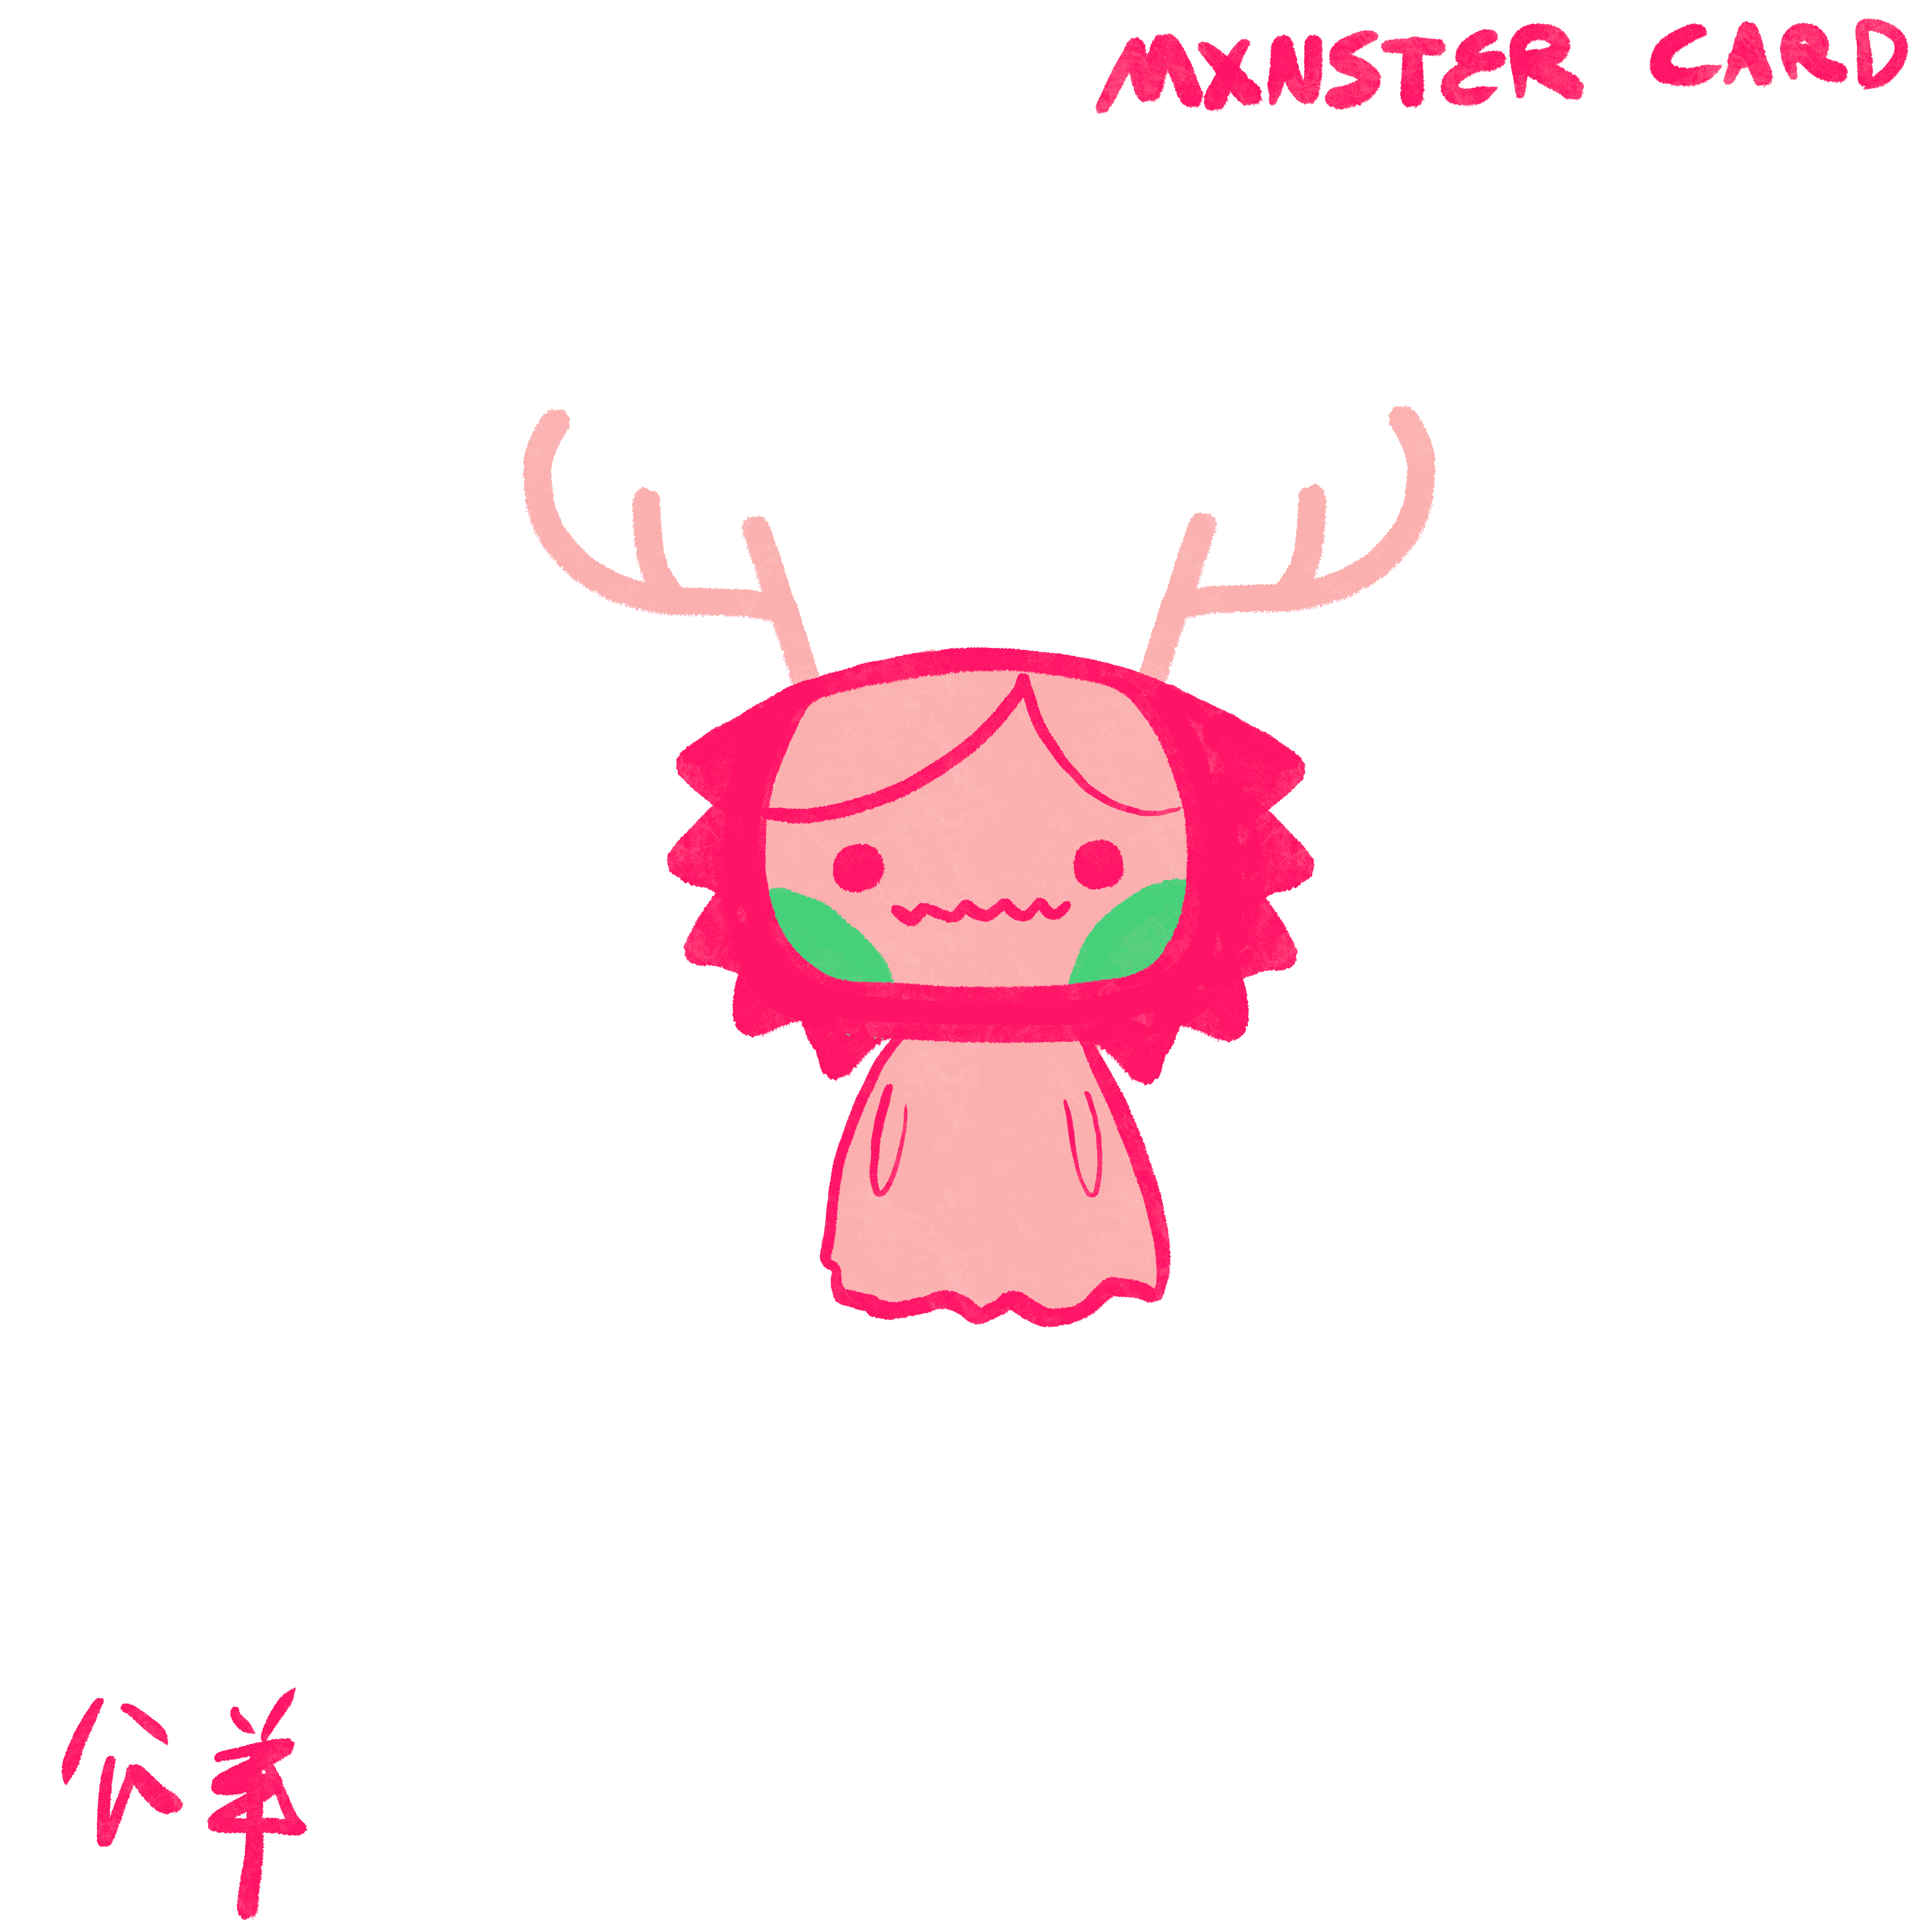 Mxnster Card 24